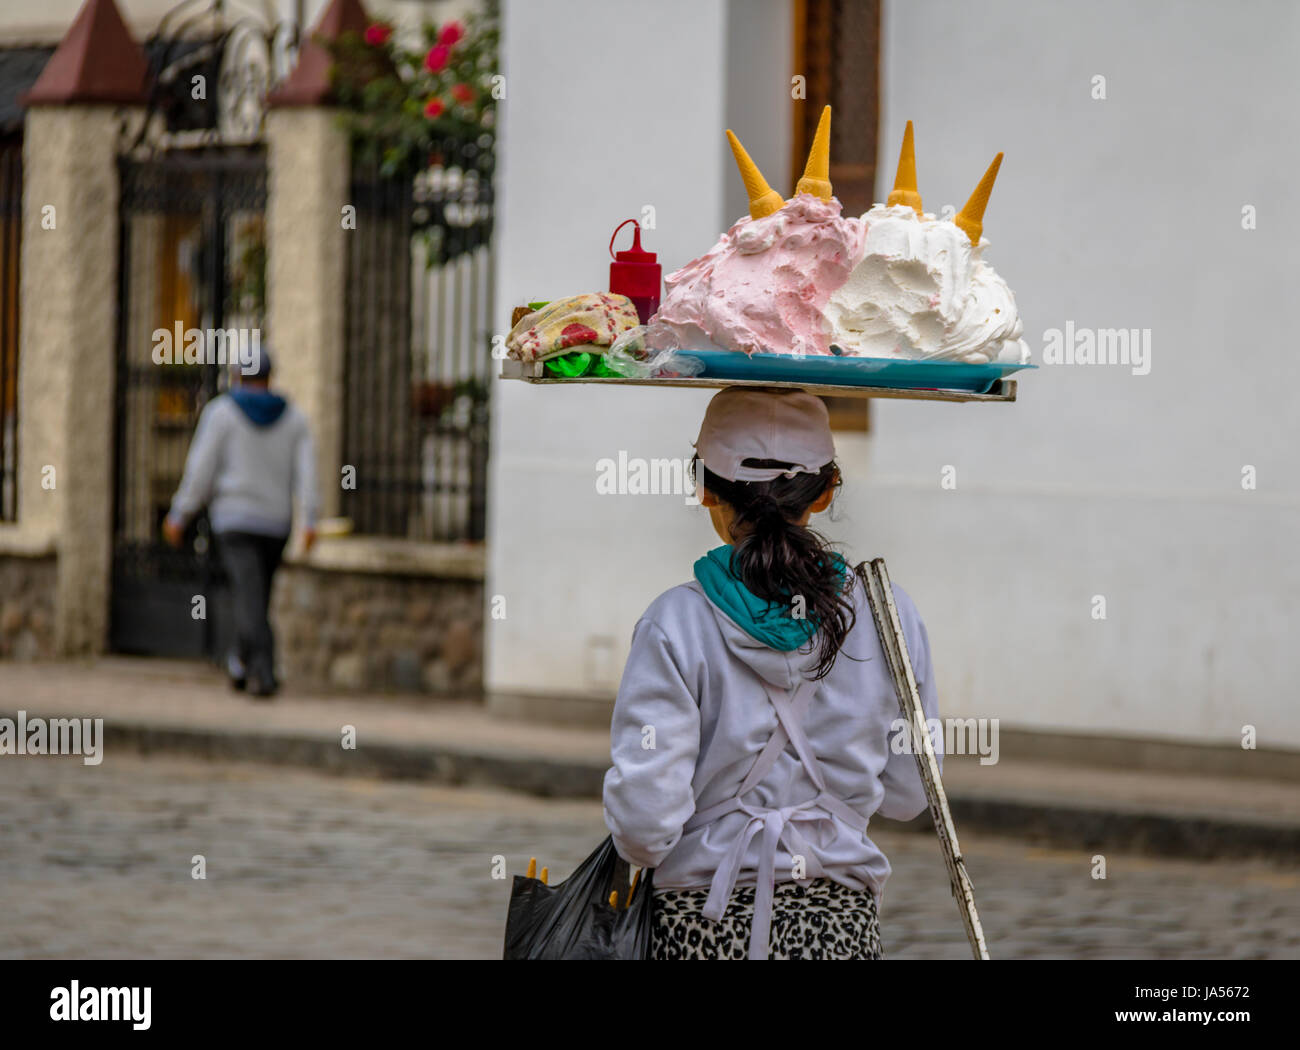 Typical Espumilla (meringue like dessert on ice cream cone) street vendor - Cuenca, Ecuador Stock Photo